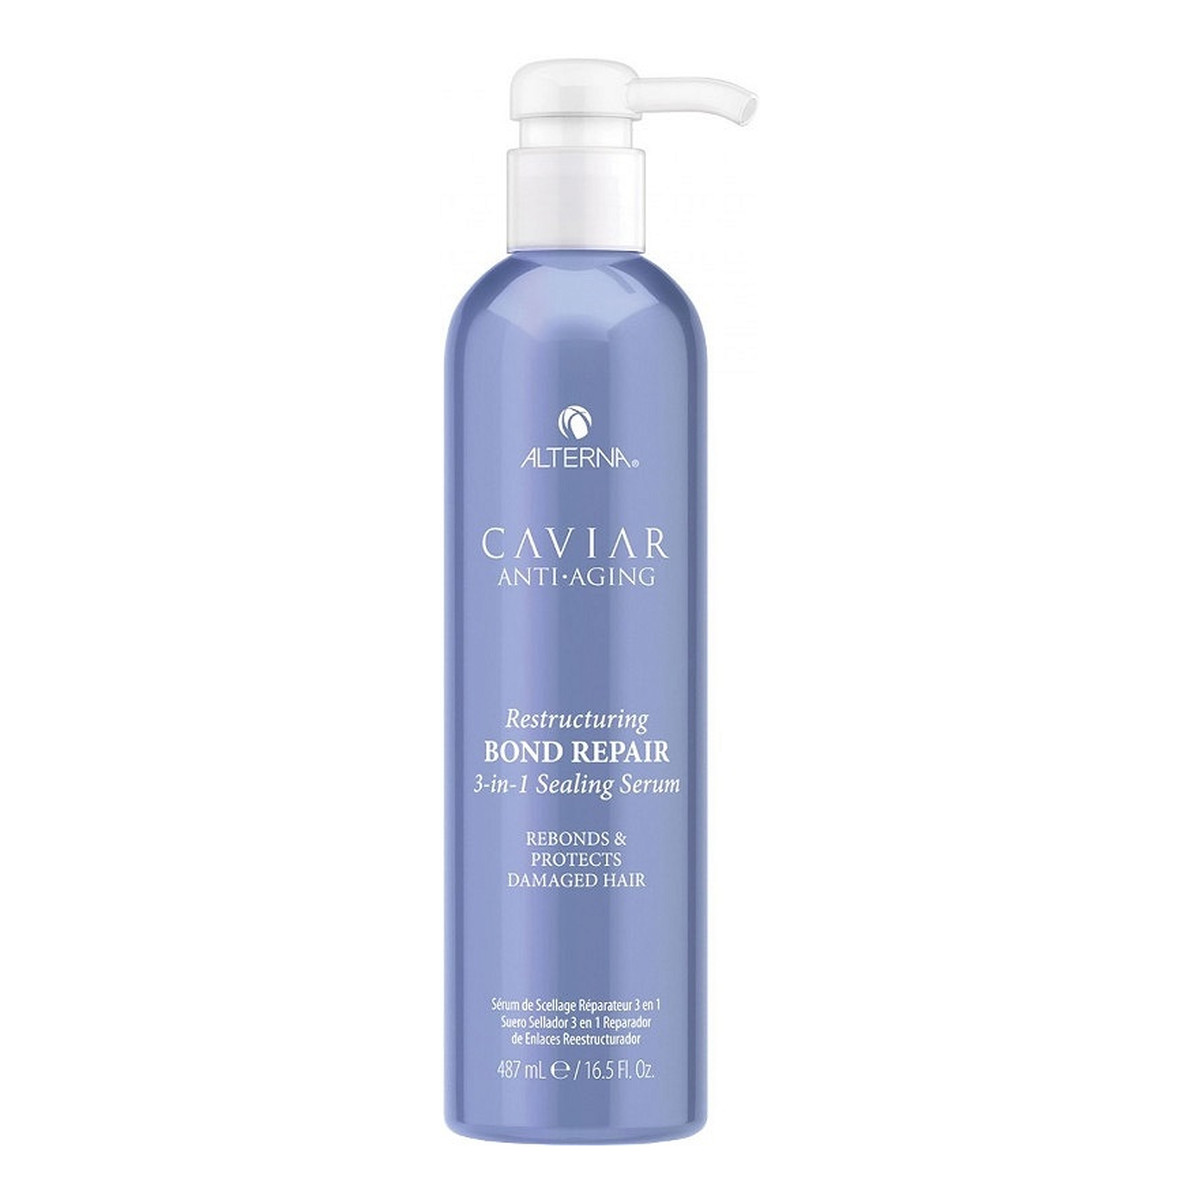 Alterna Caviar anti-aging restructuring bond repair 3-in-1 sealing serum odbudowujące serum do włosów 487ml